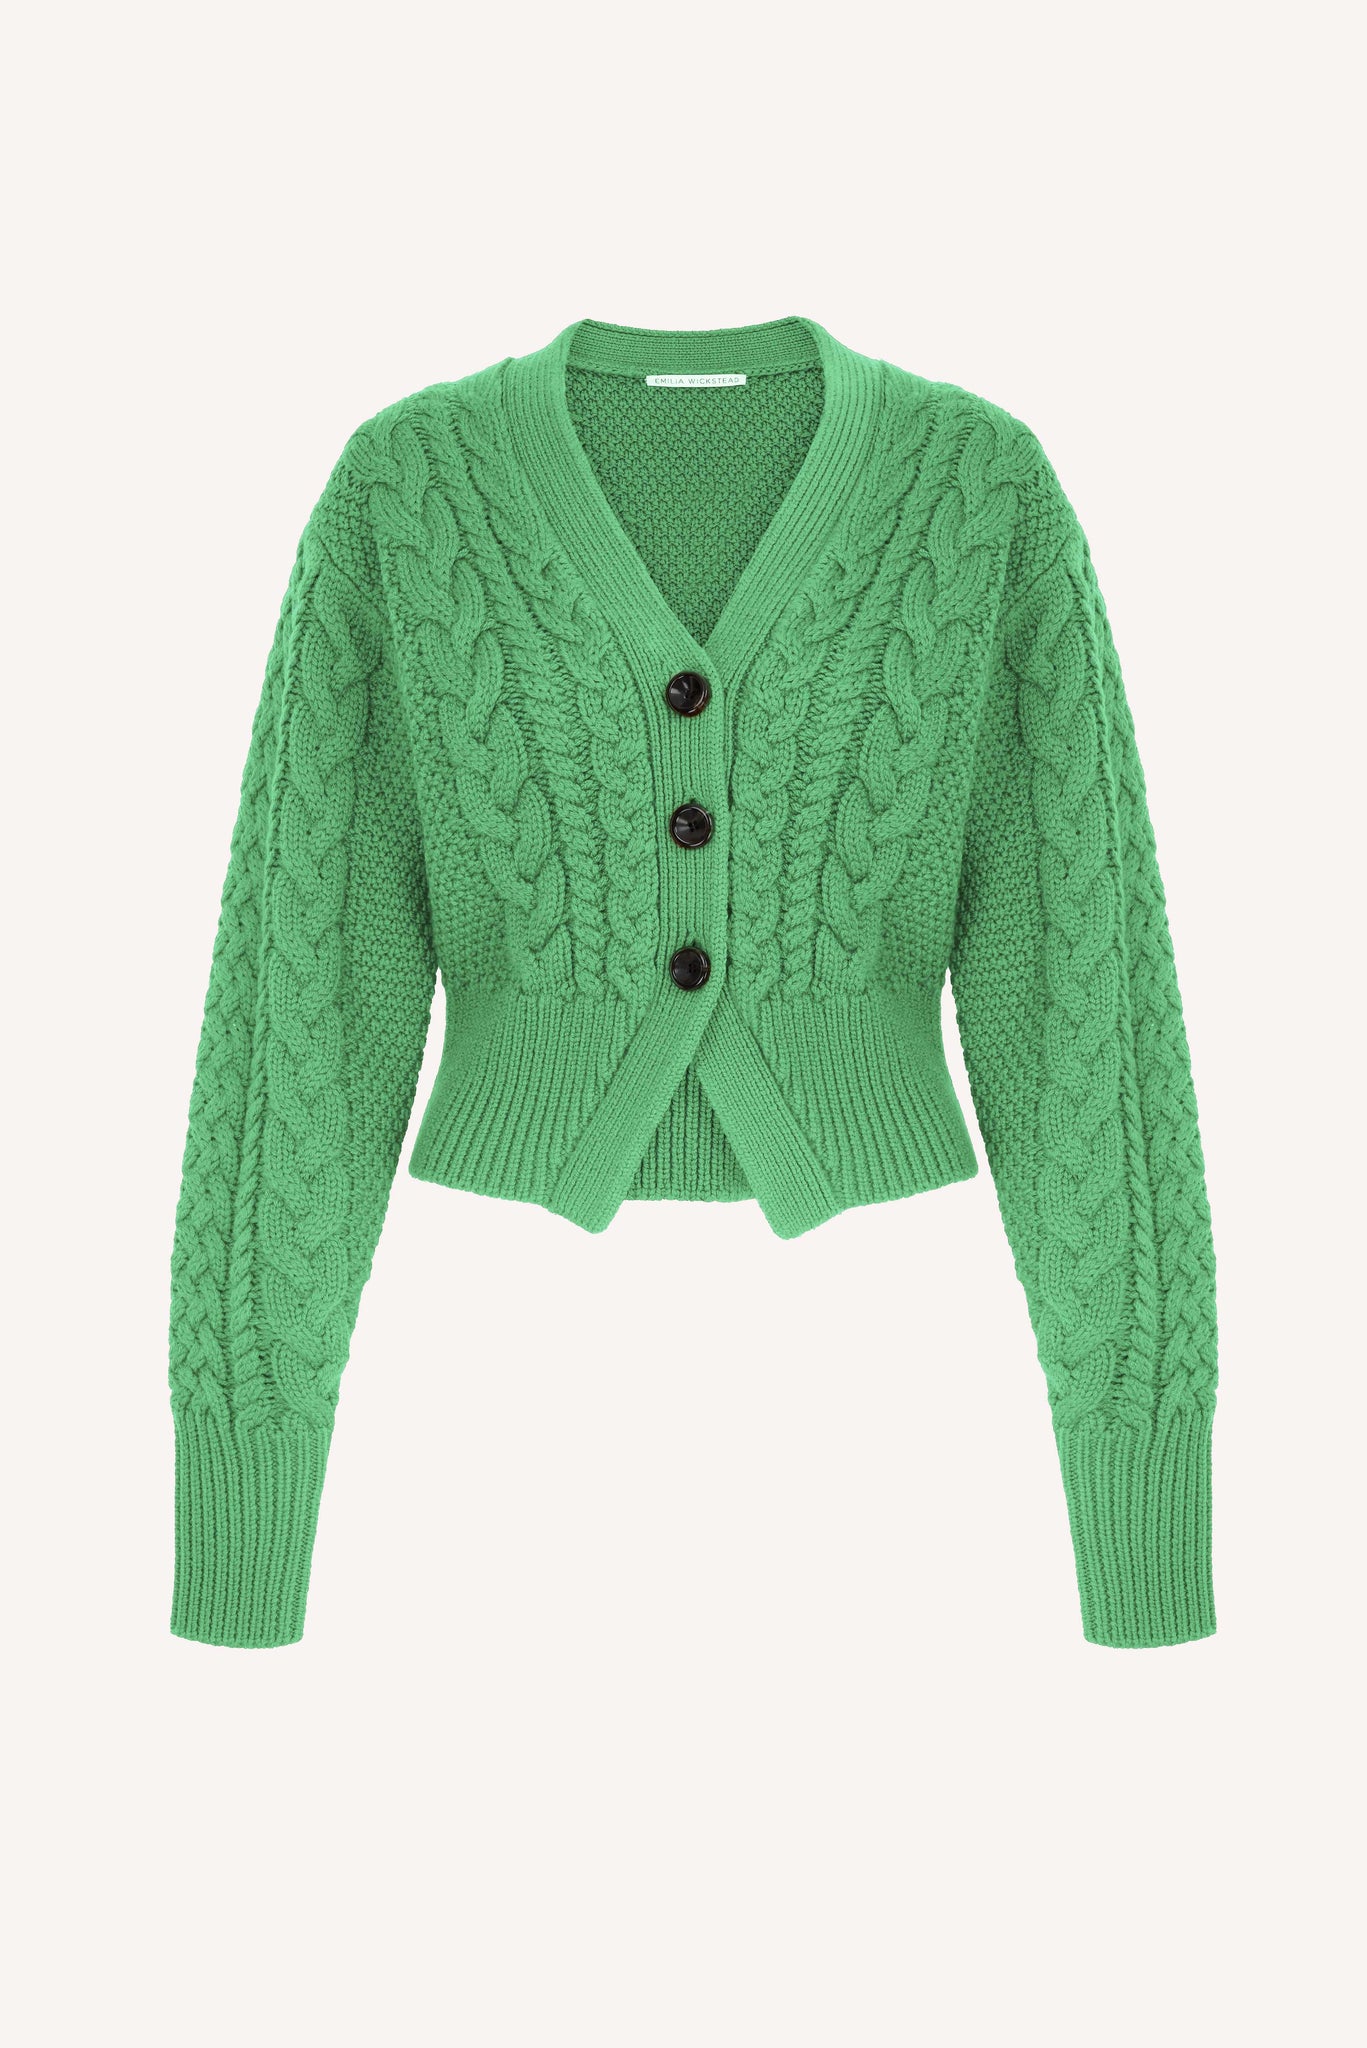 Jacks Green Cashfeel Cable Knit Cardigan| Emilia Wickstead